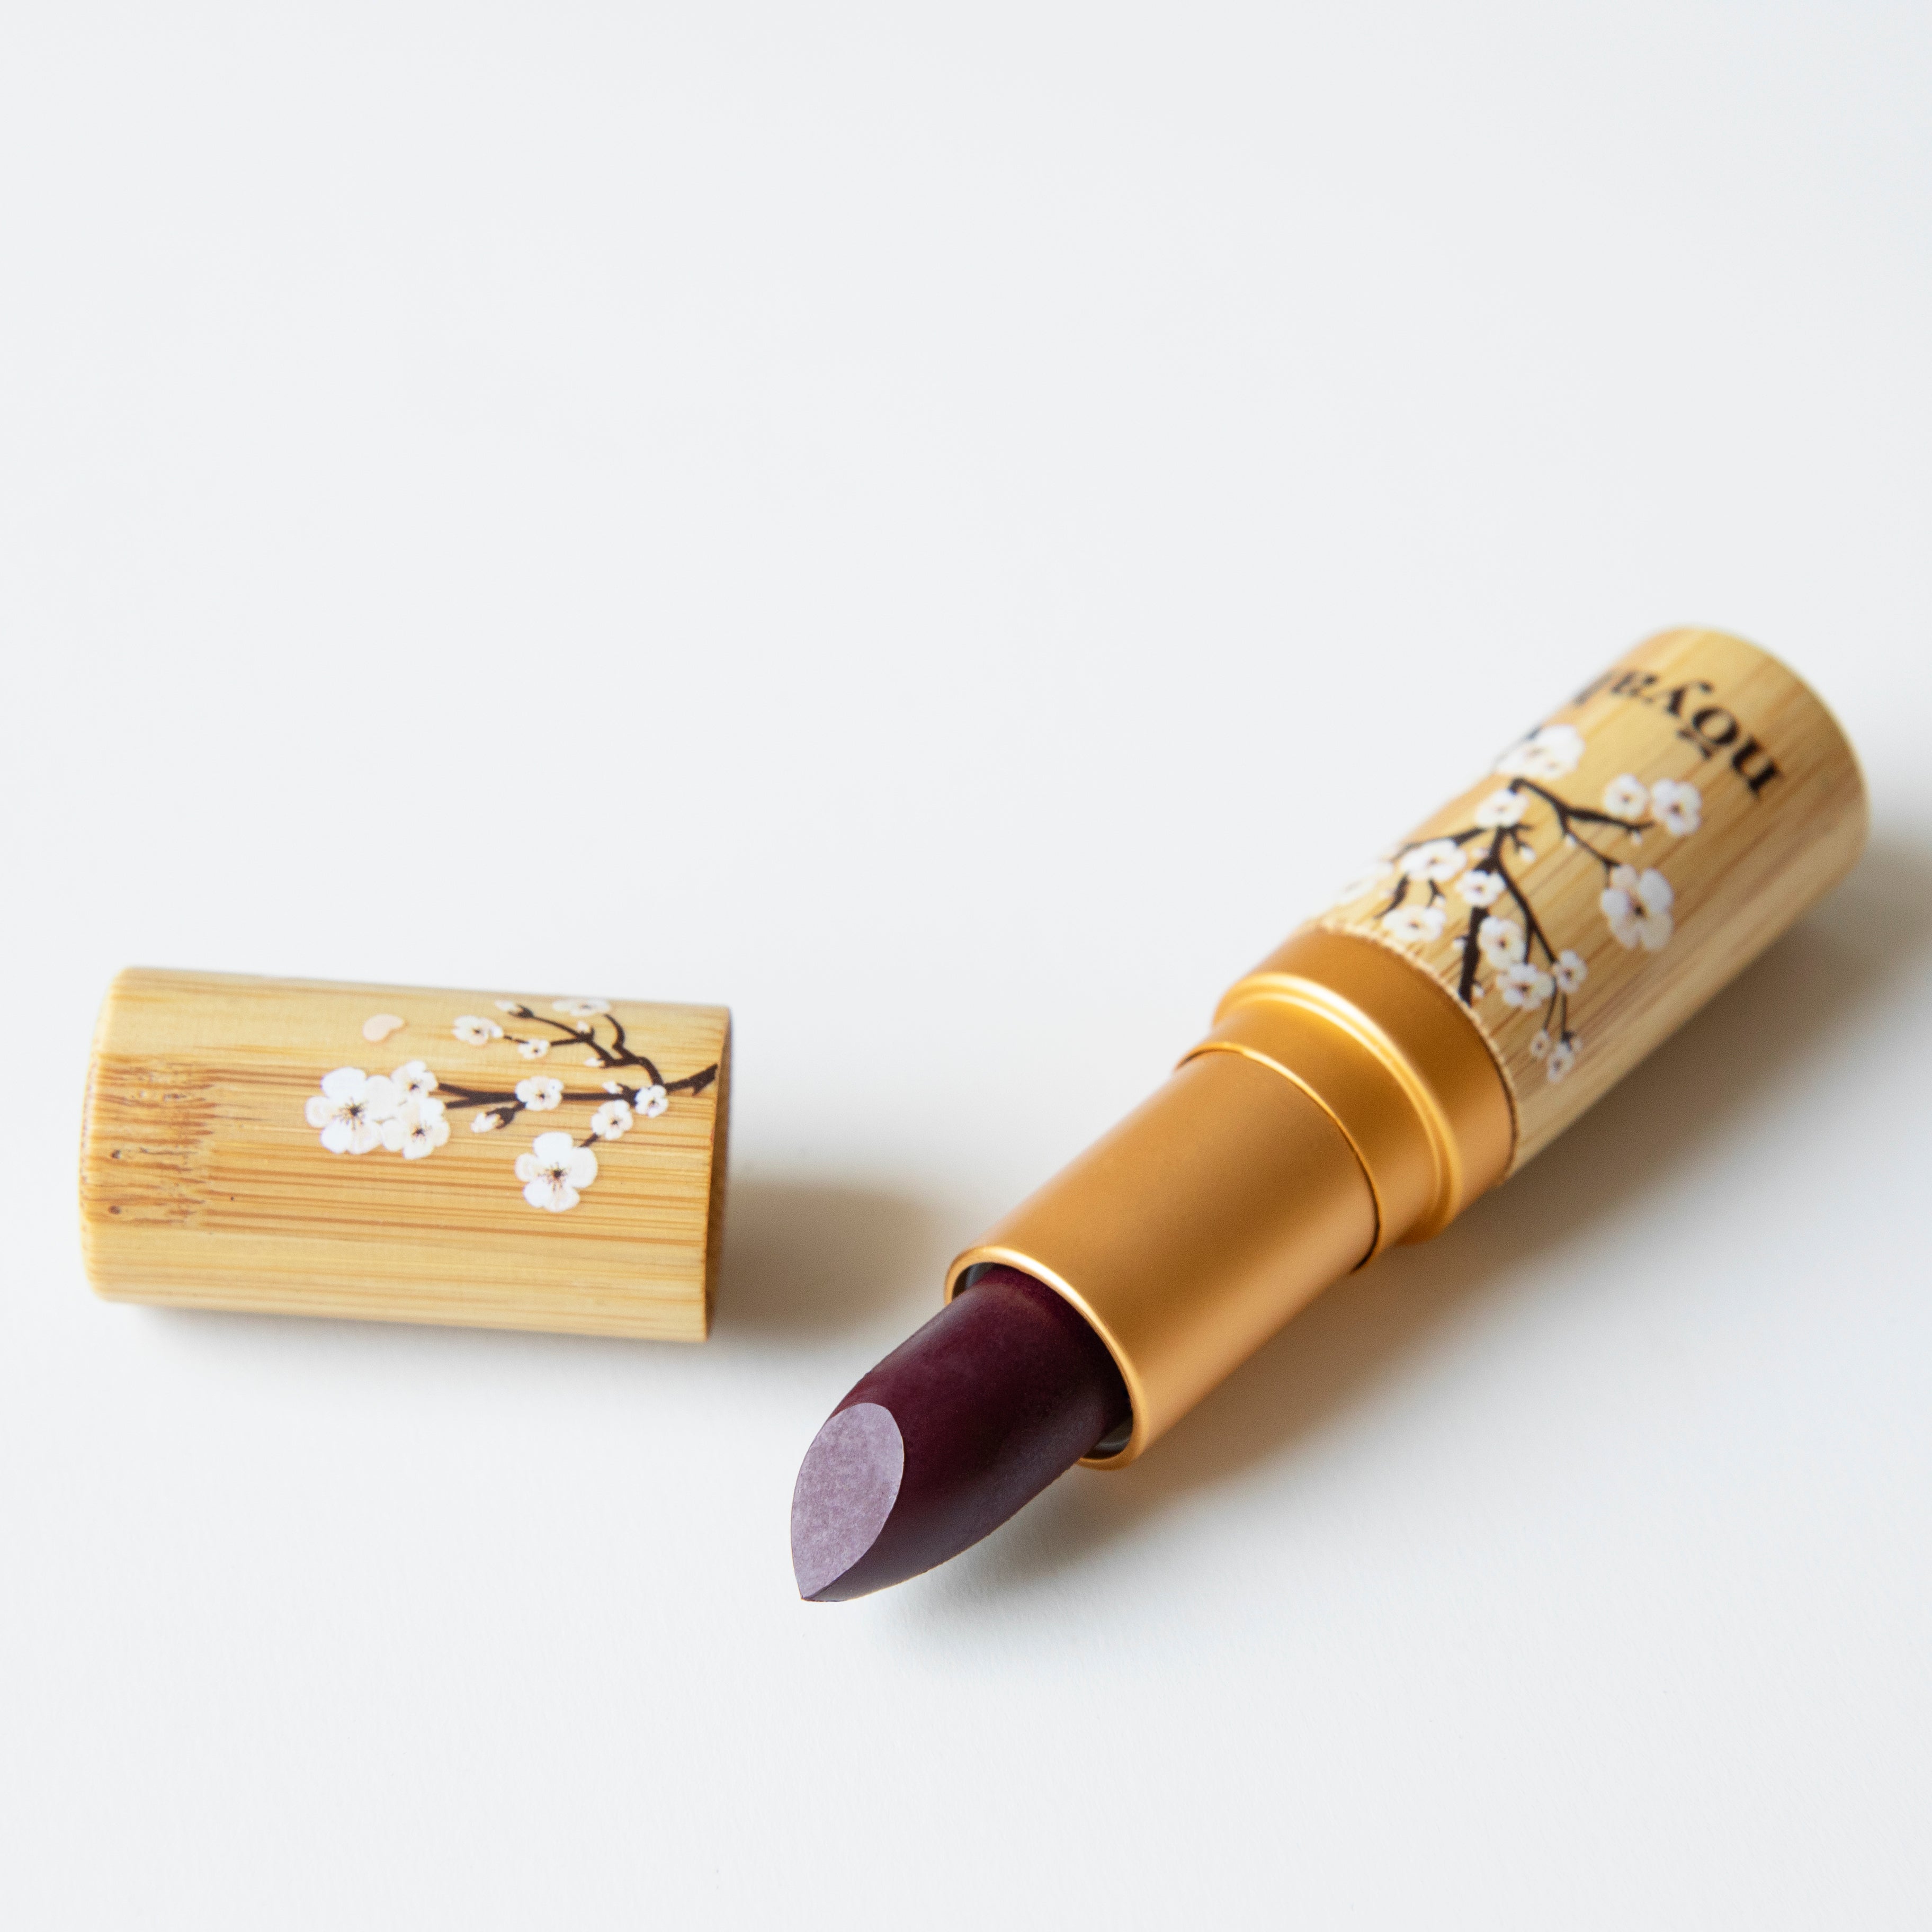 Noyah Lipstick (Currant News) 唇天然唇膏 (葡萄紫玫) 4.5g